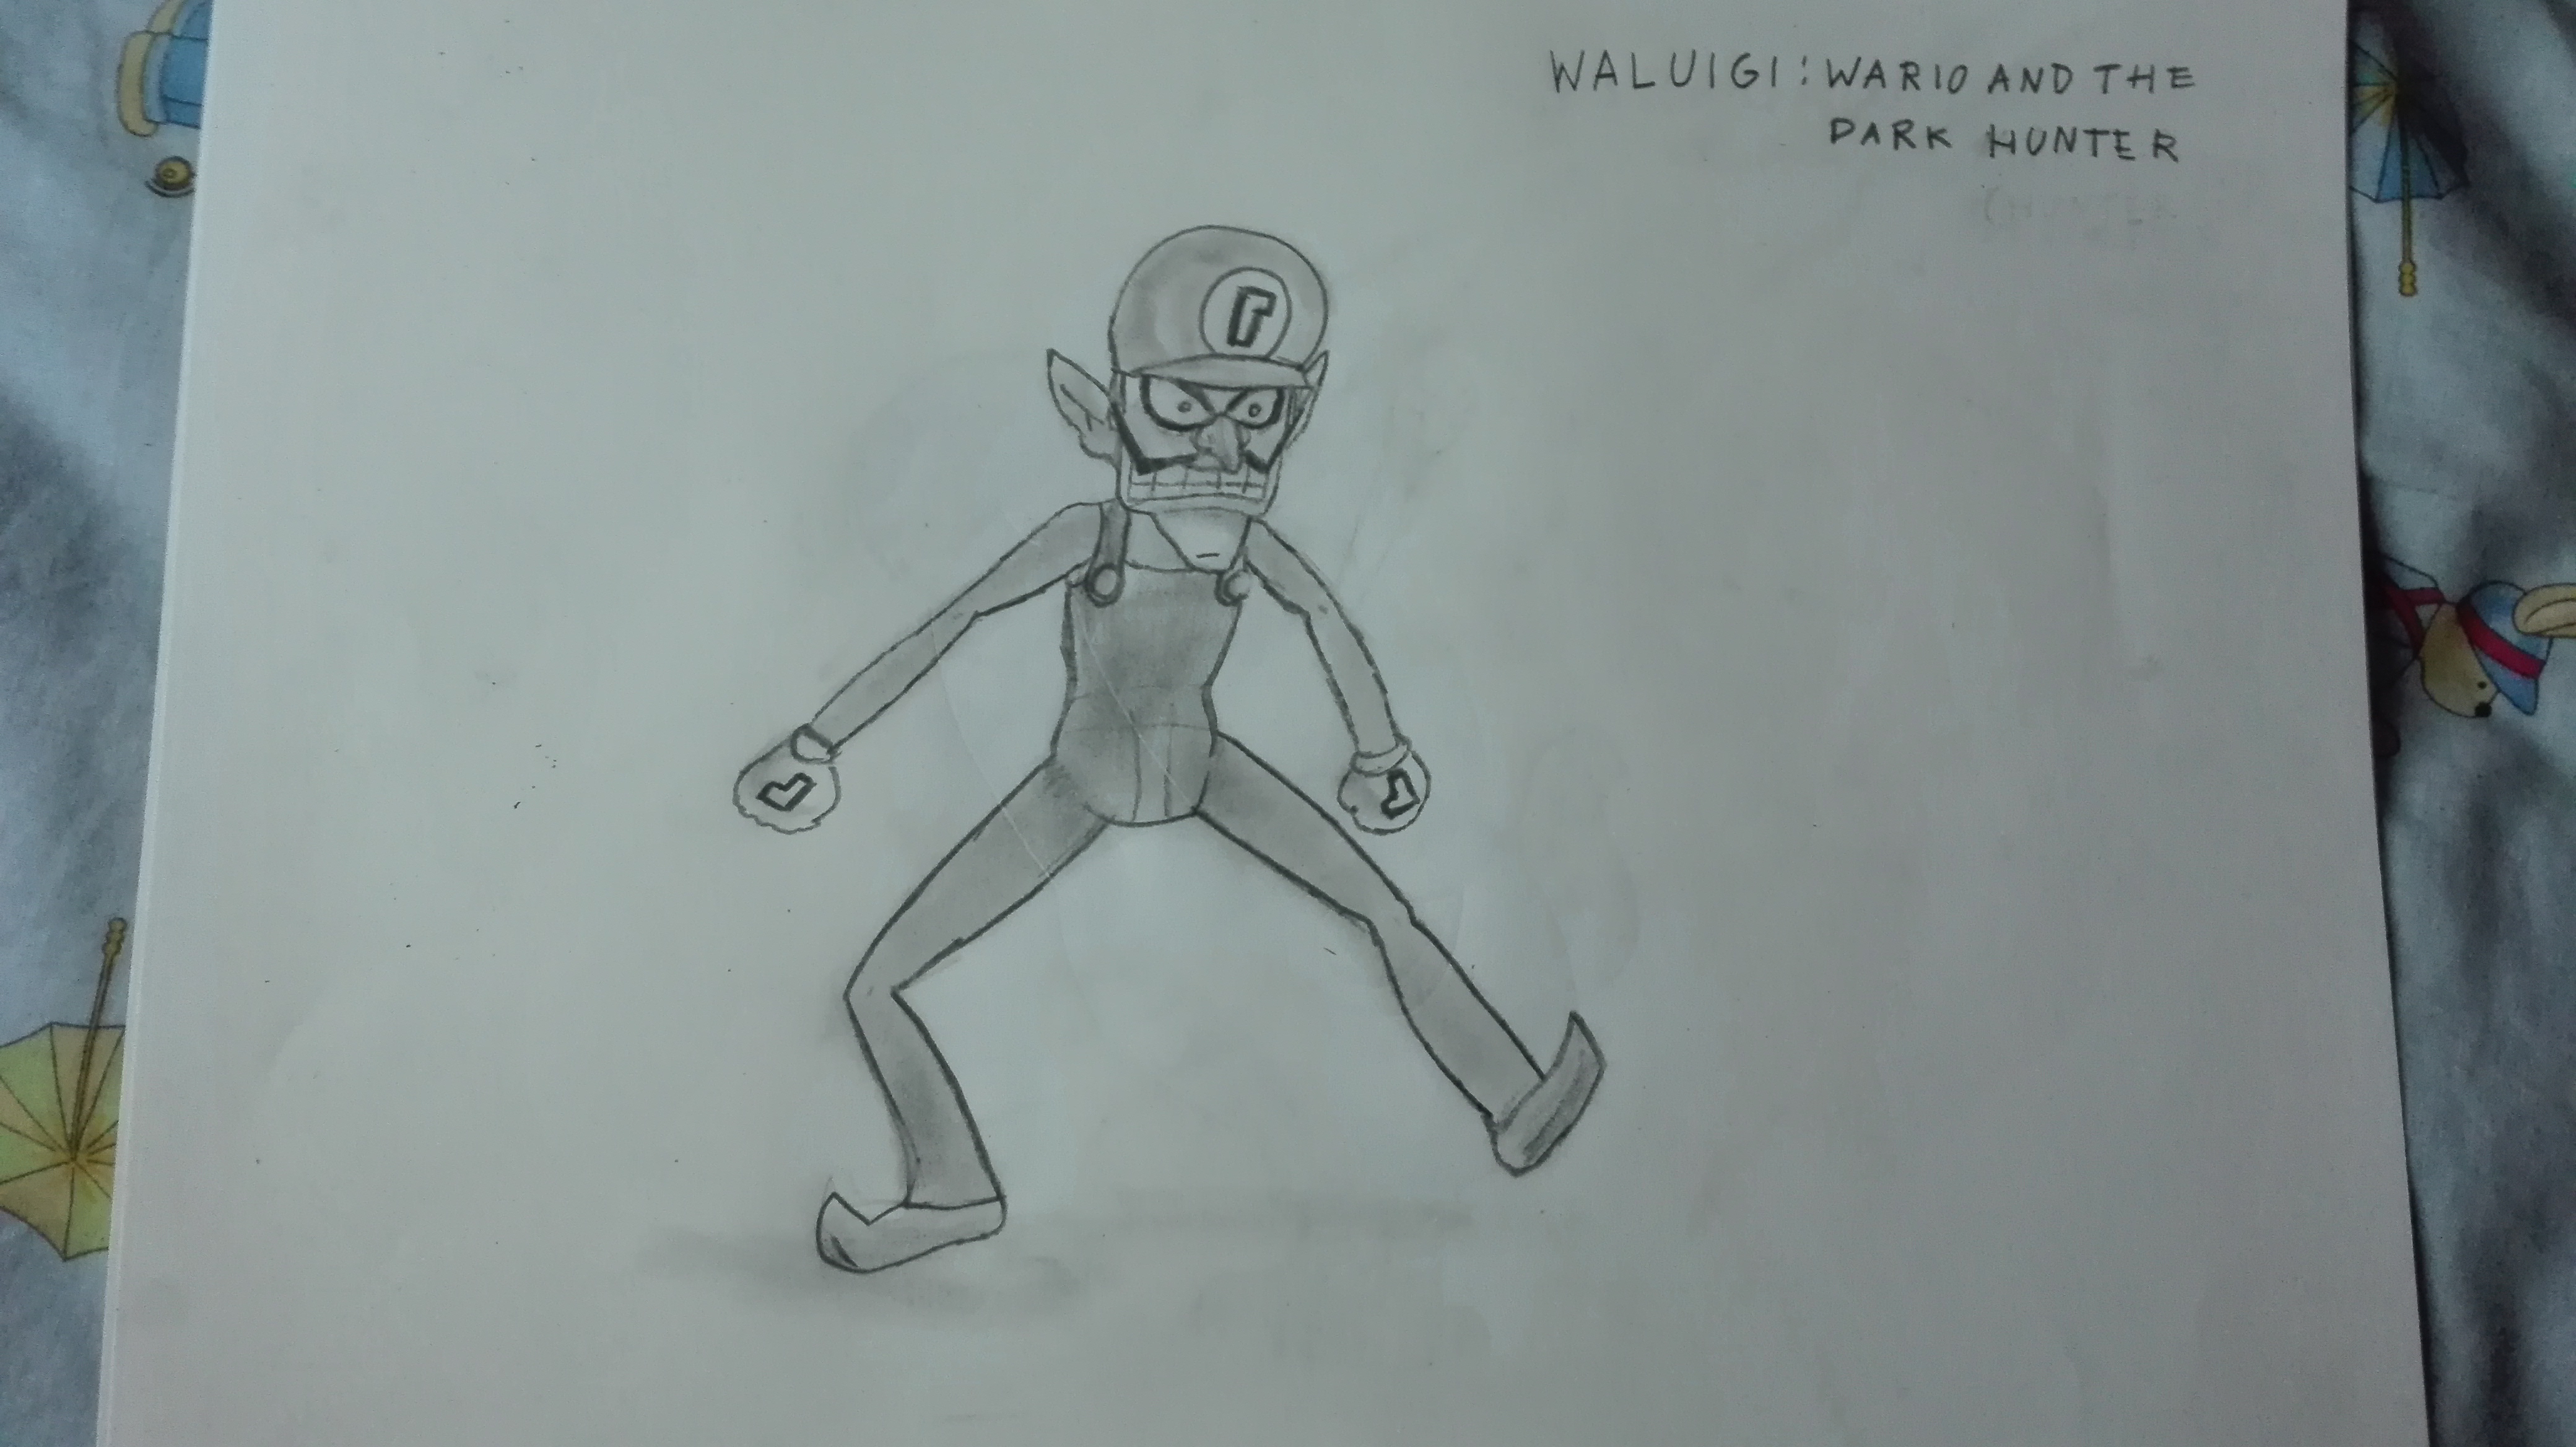 Waluigi: Wario and the Dark Hunter